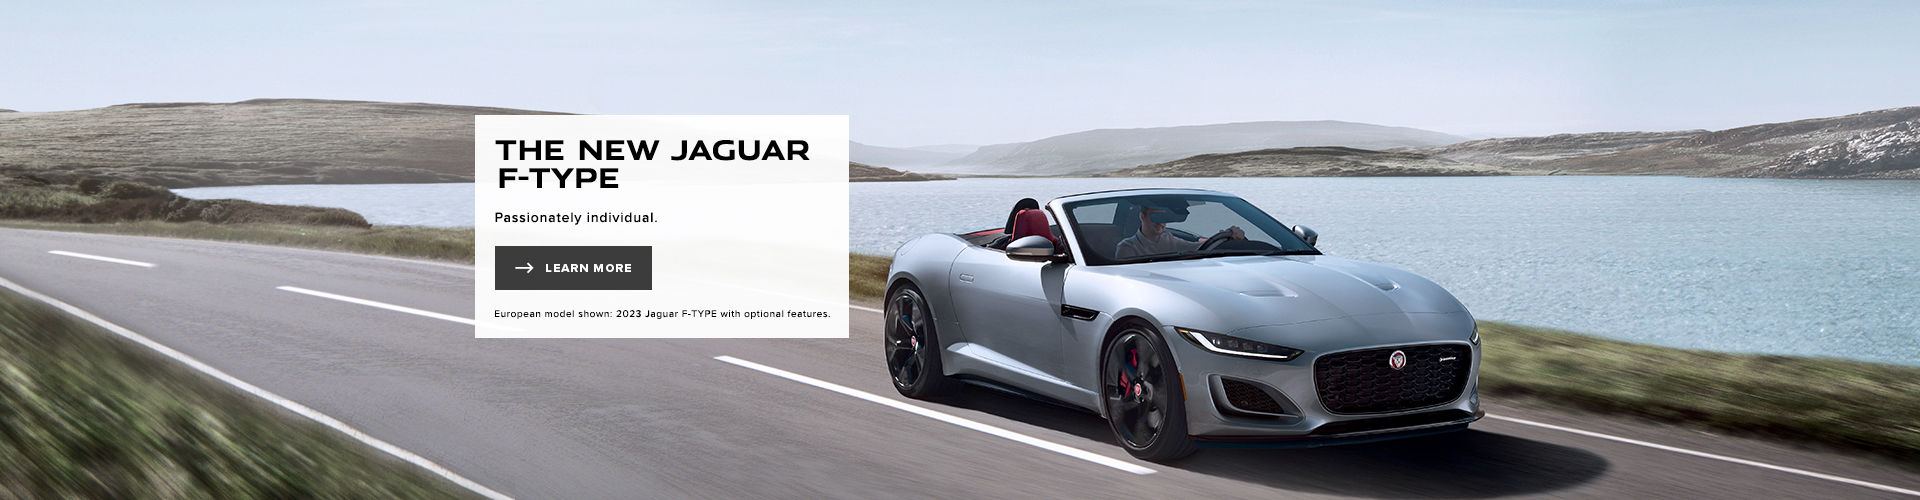 The New Jaguar F-TYPE